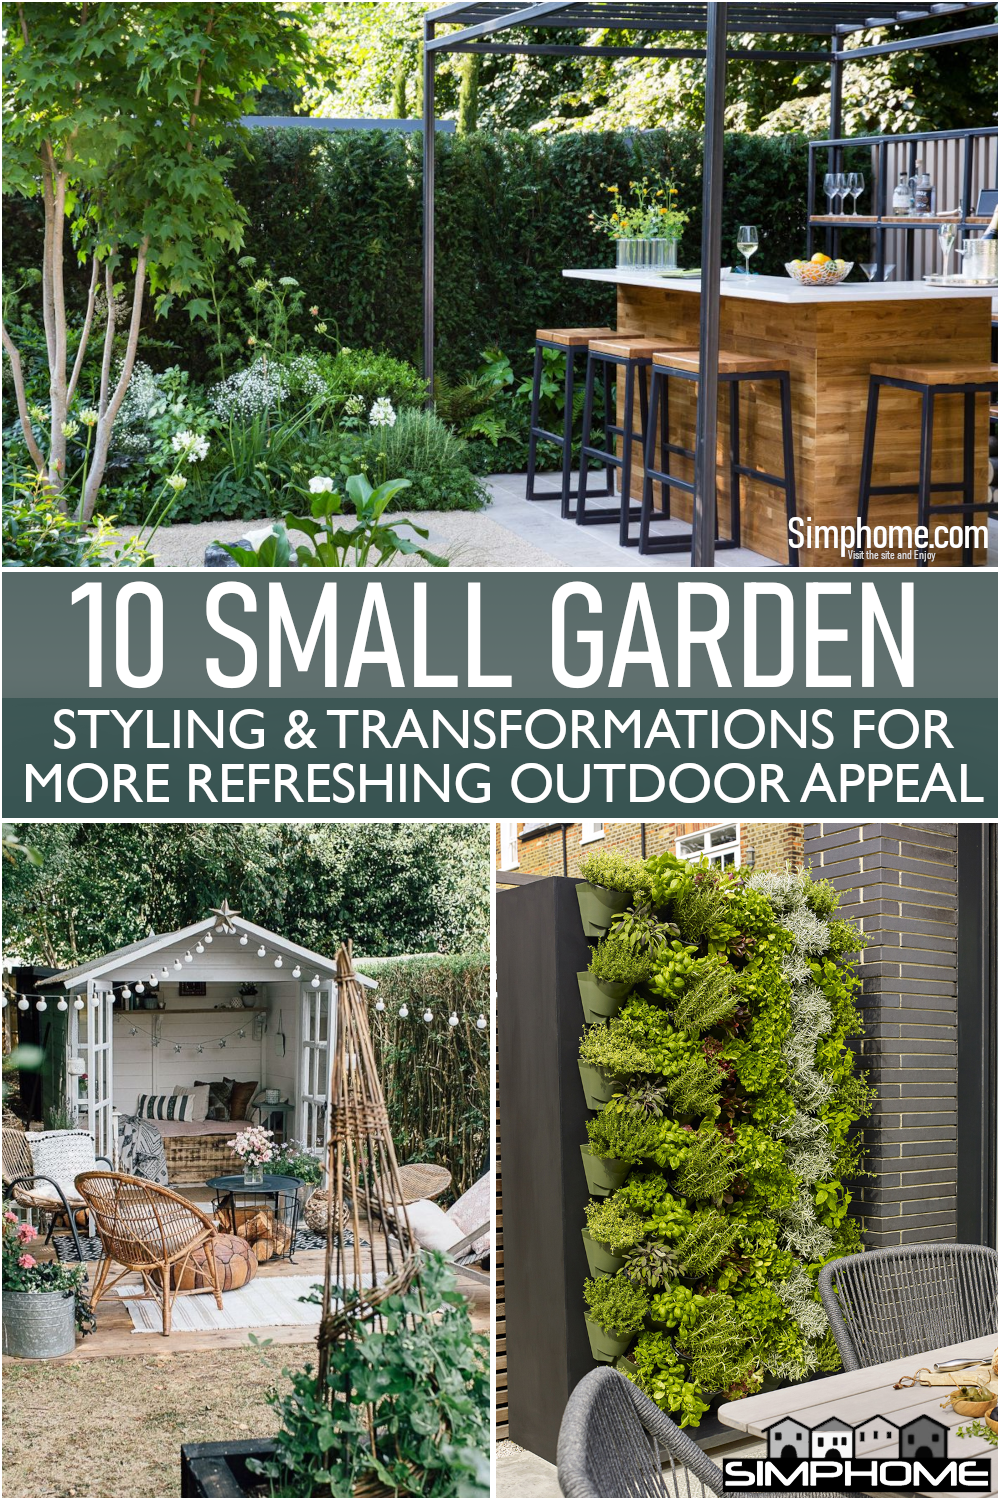 A Poster image for 10 Small Garden Styling Ideas via Simphome.com